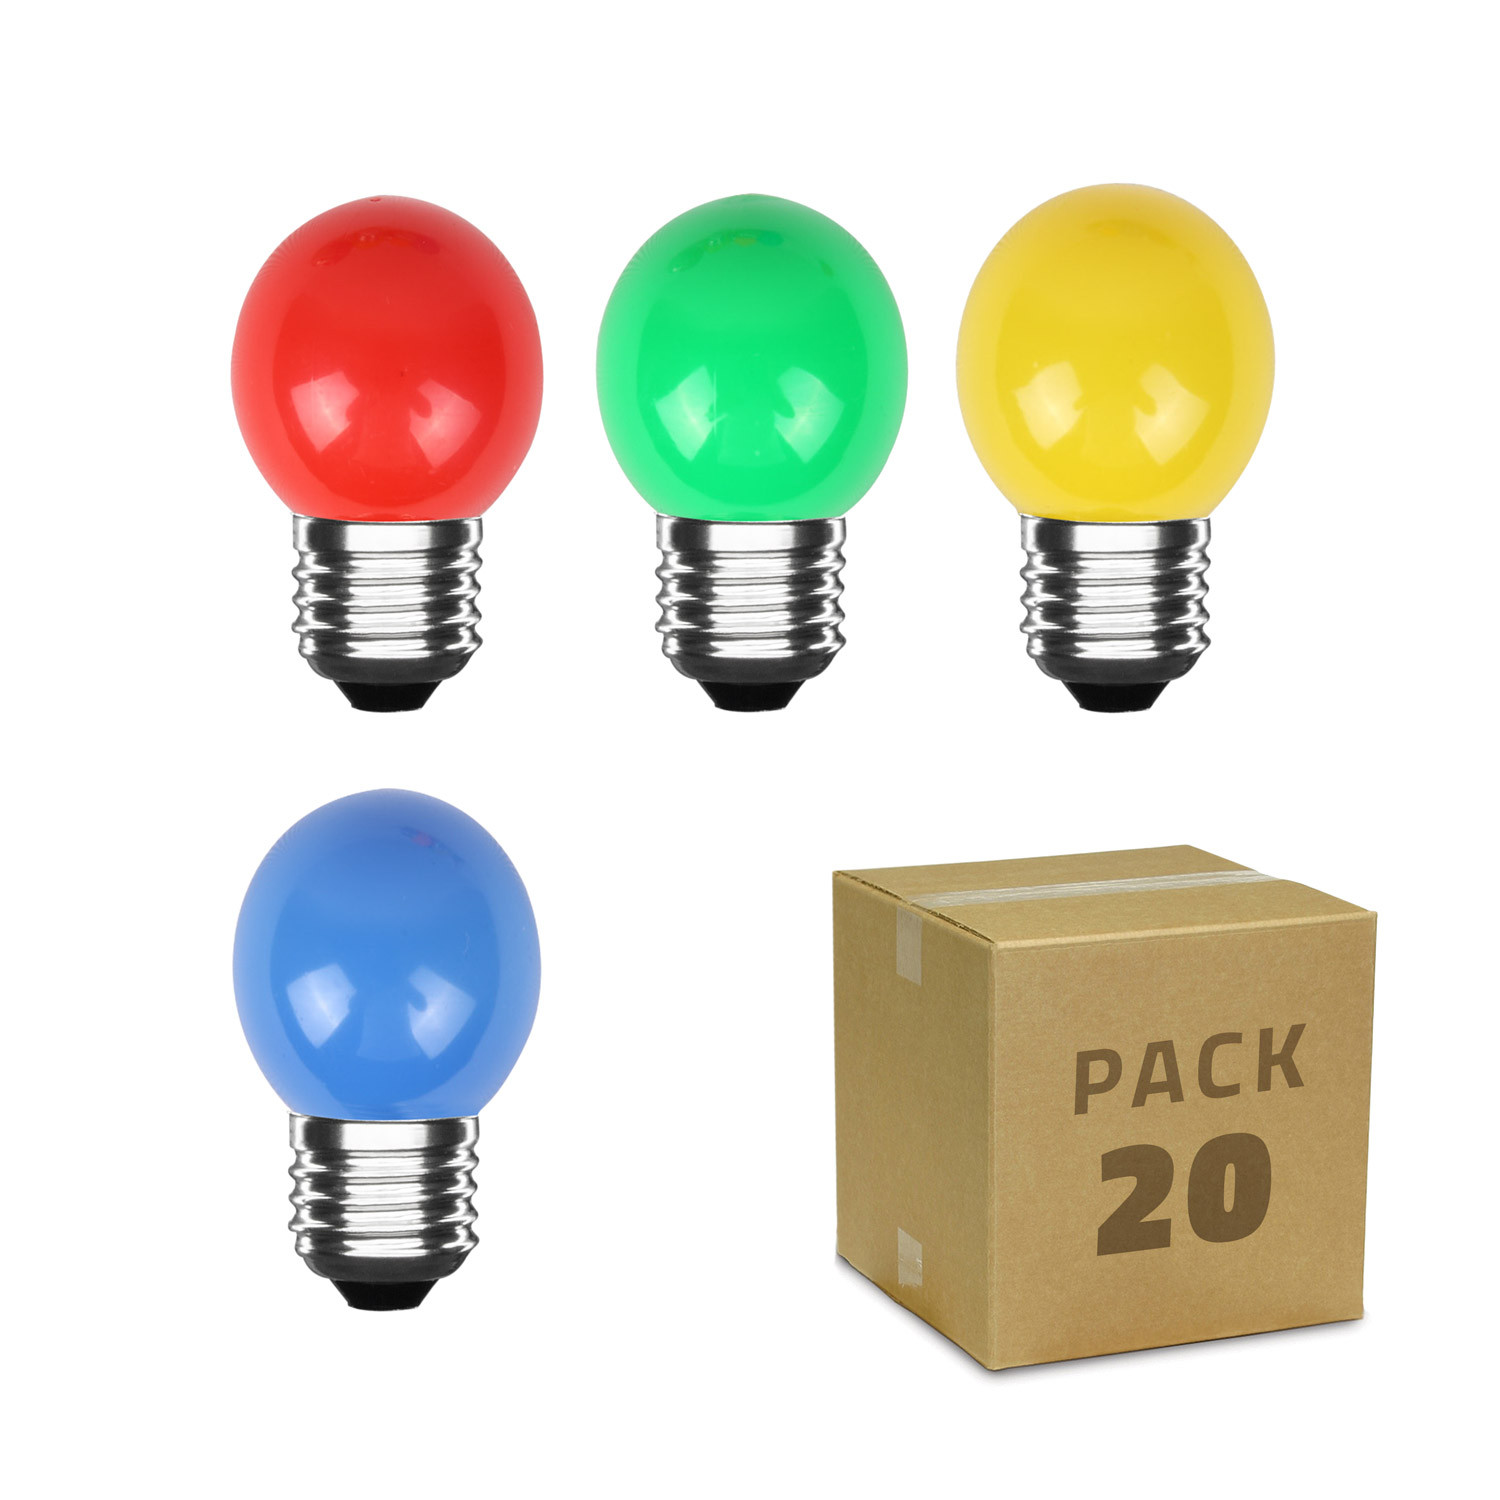 Pack 20 st LED Lampen 300 lm 4 Kleuren - Ledkia